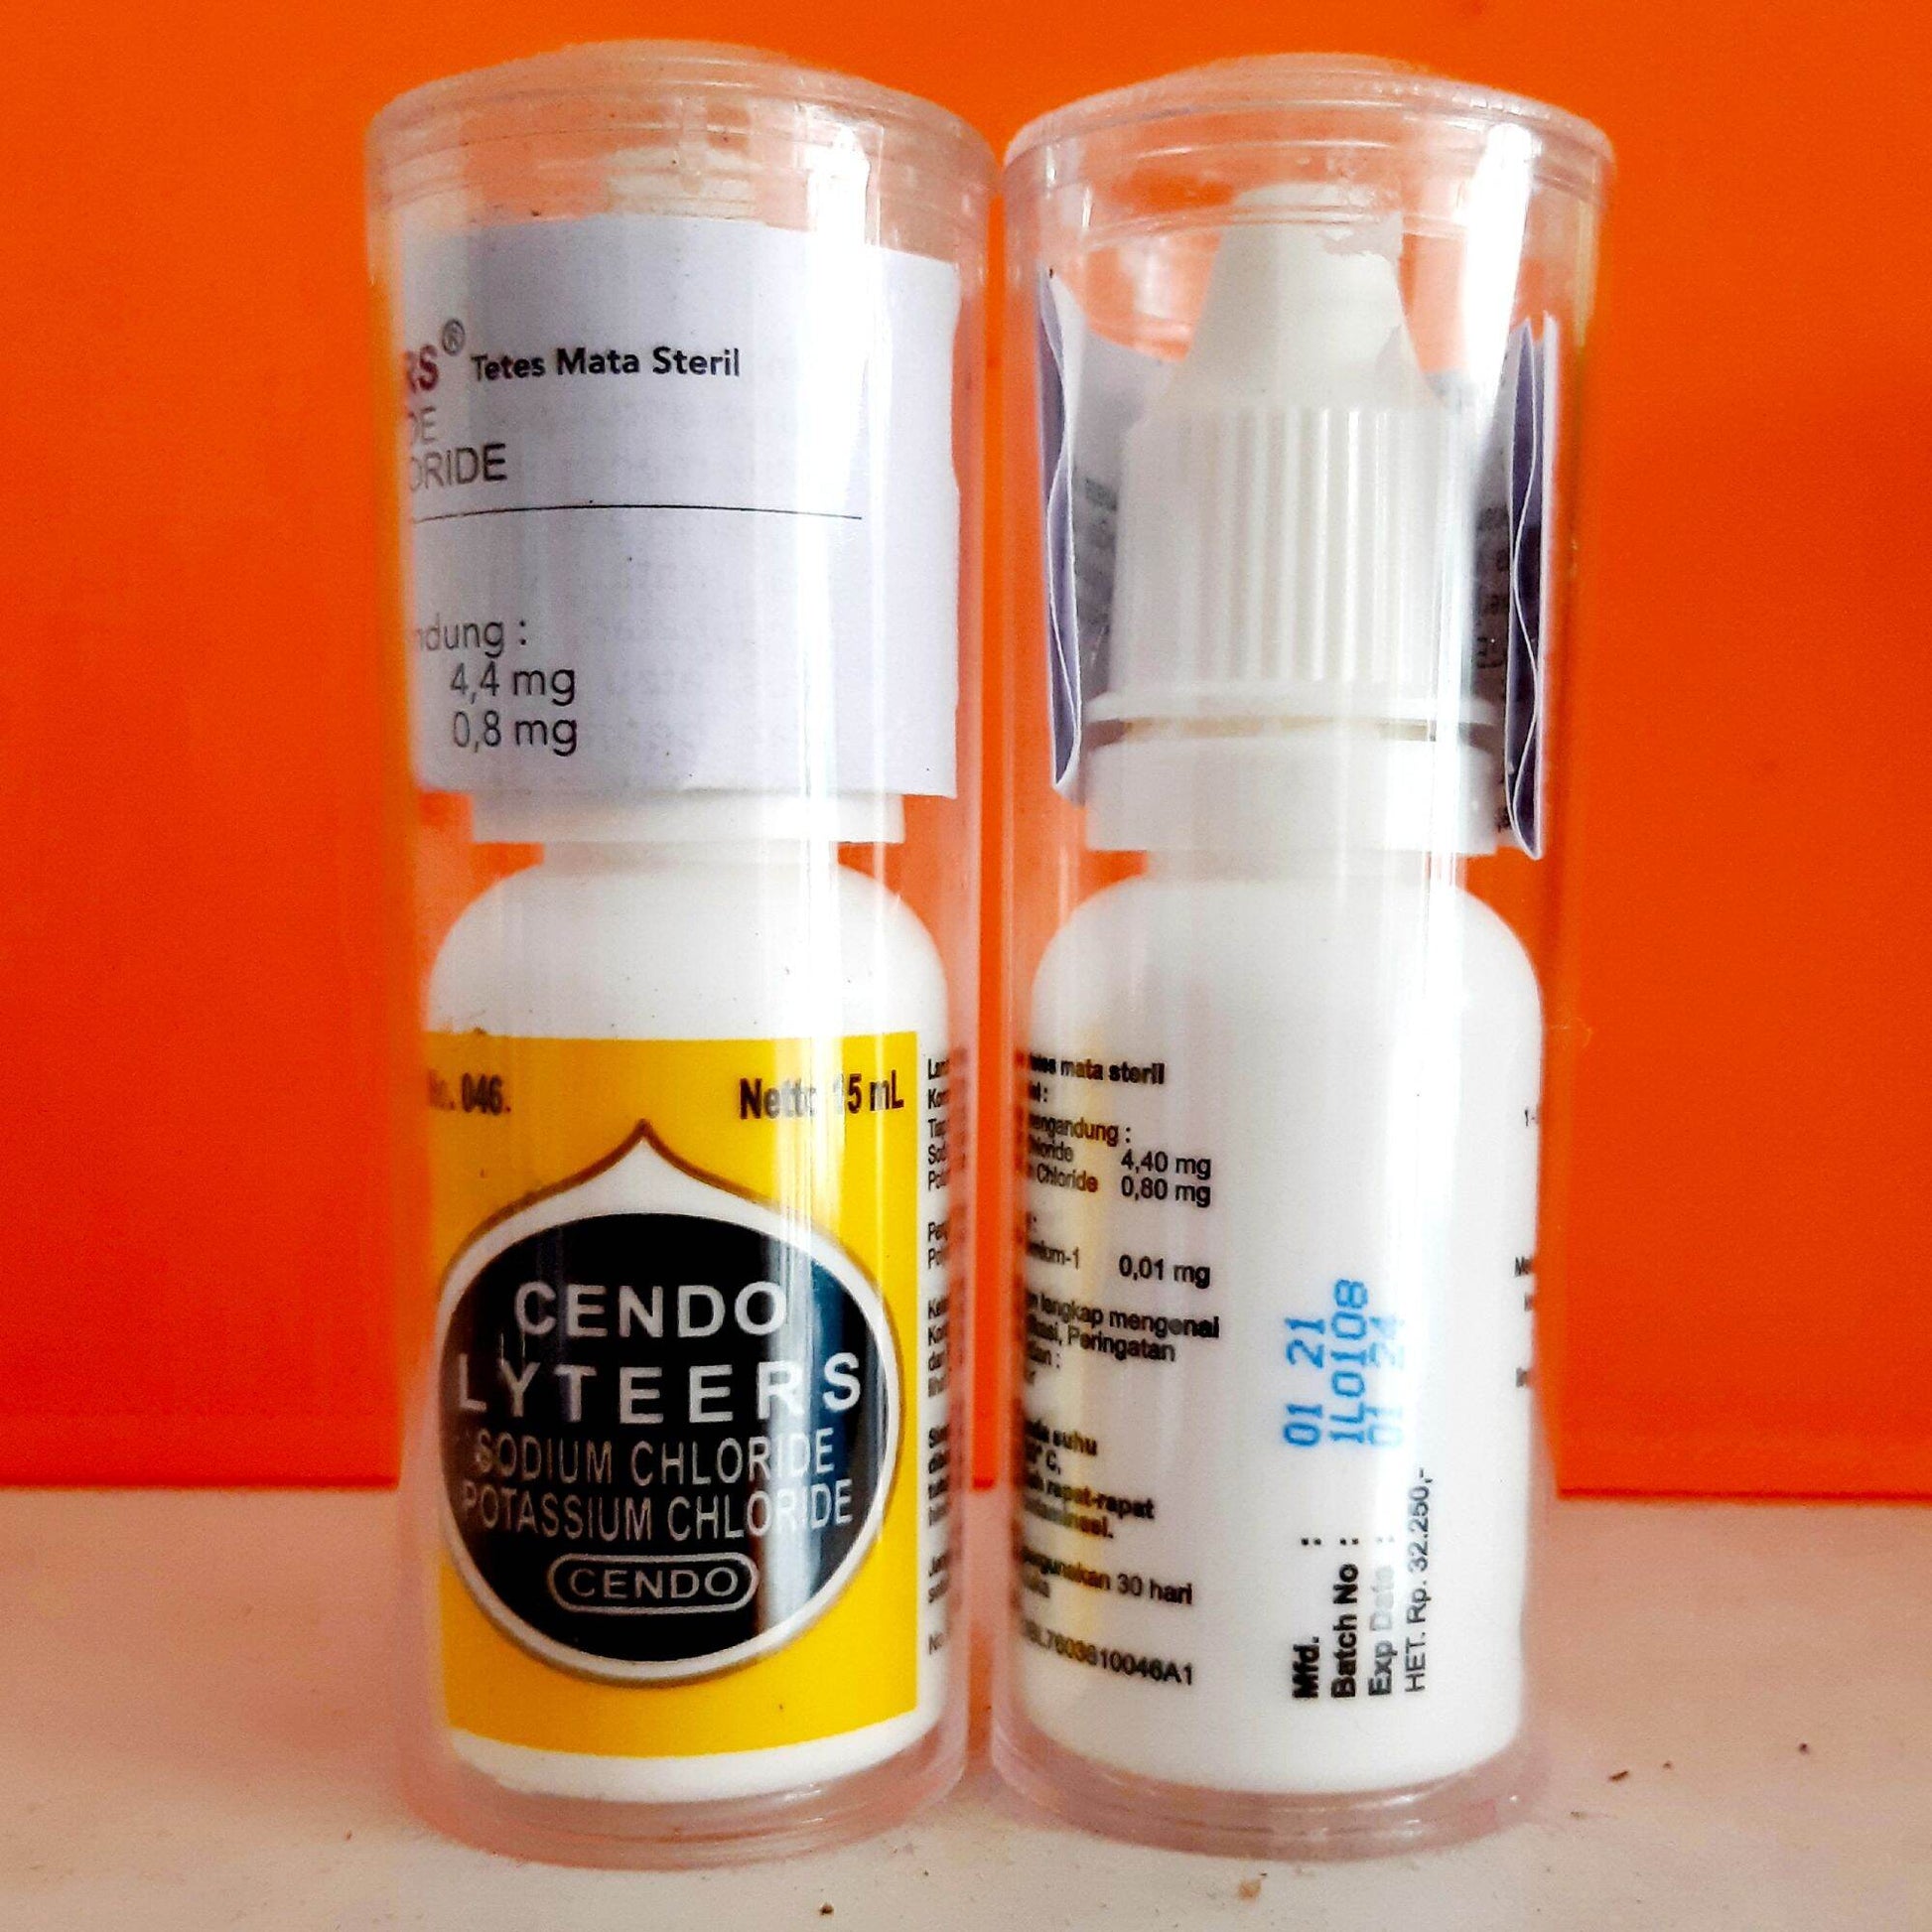 Sodium Chloride Cendo Lyteers Bottle 15ml Eye Drops For Dry or Irritation Eyes